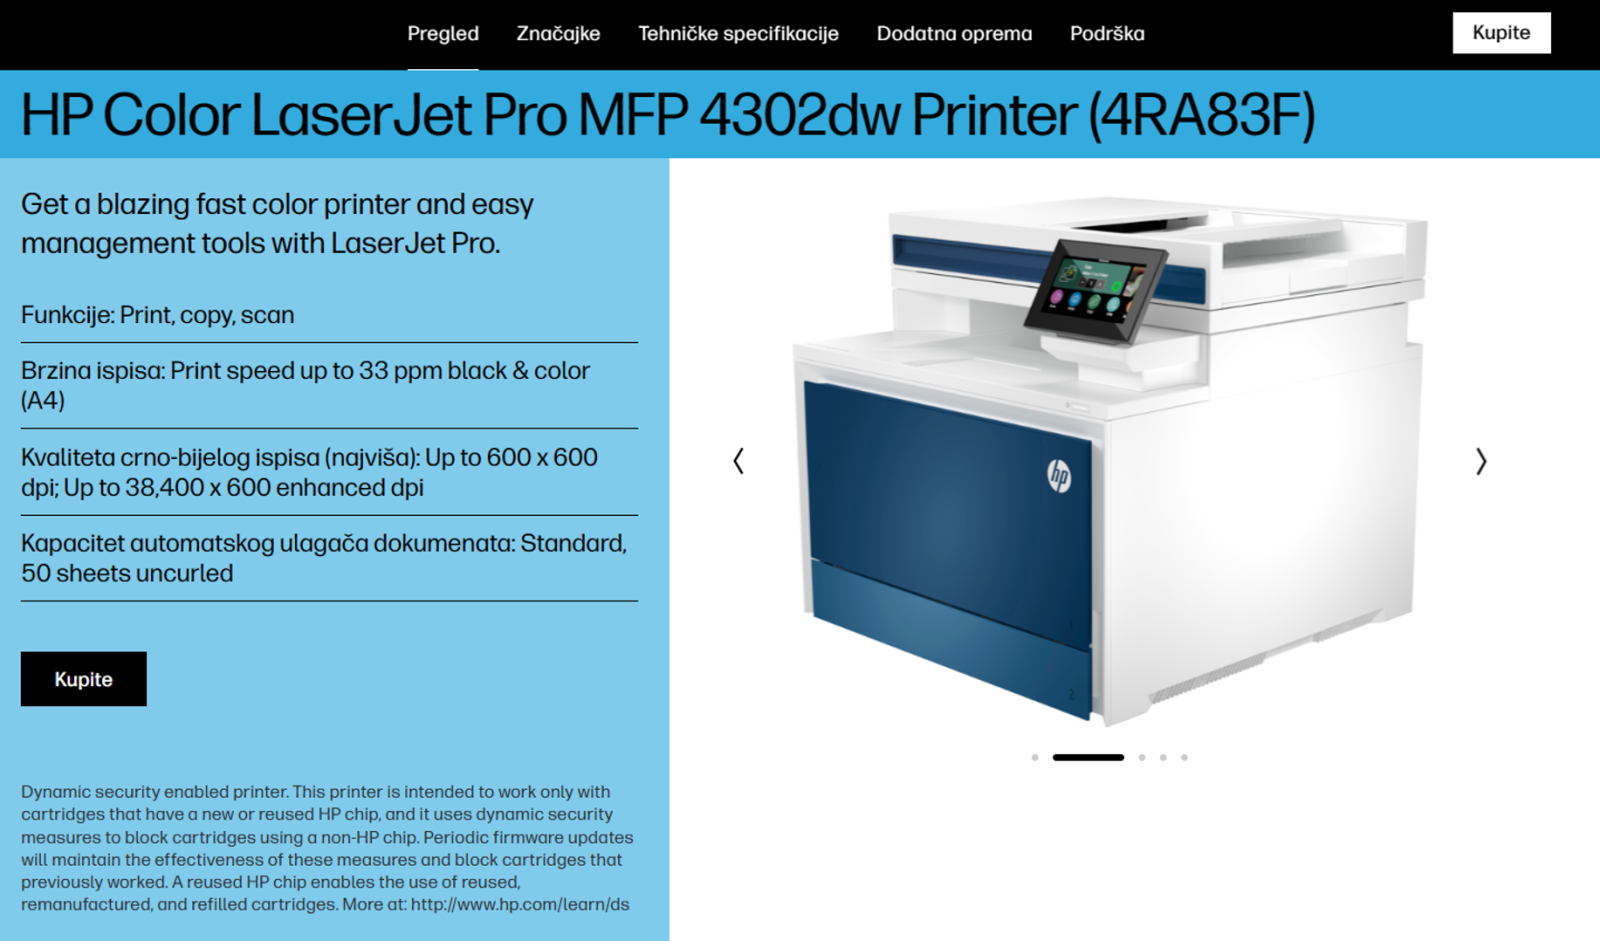 Snimka zaslona stranice proizvoda printera HP Color LaserJet Pro MFP 4302dw s filtriranim izrazom "dinamička sigurnost: 